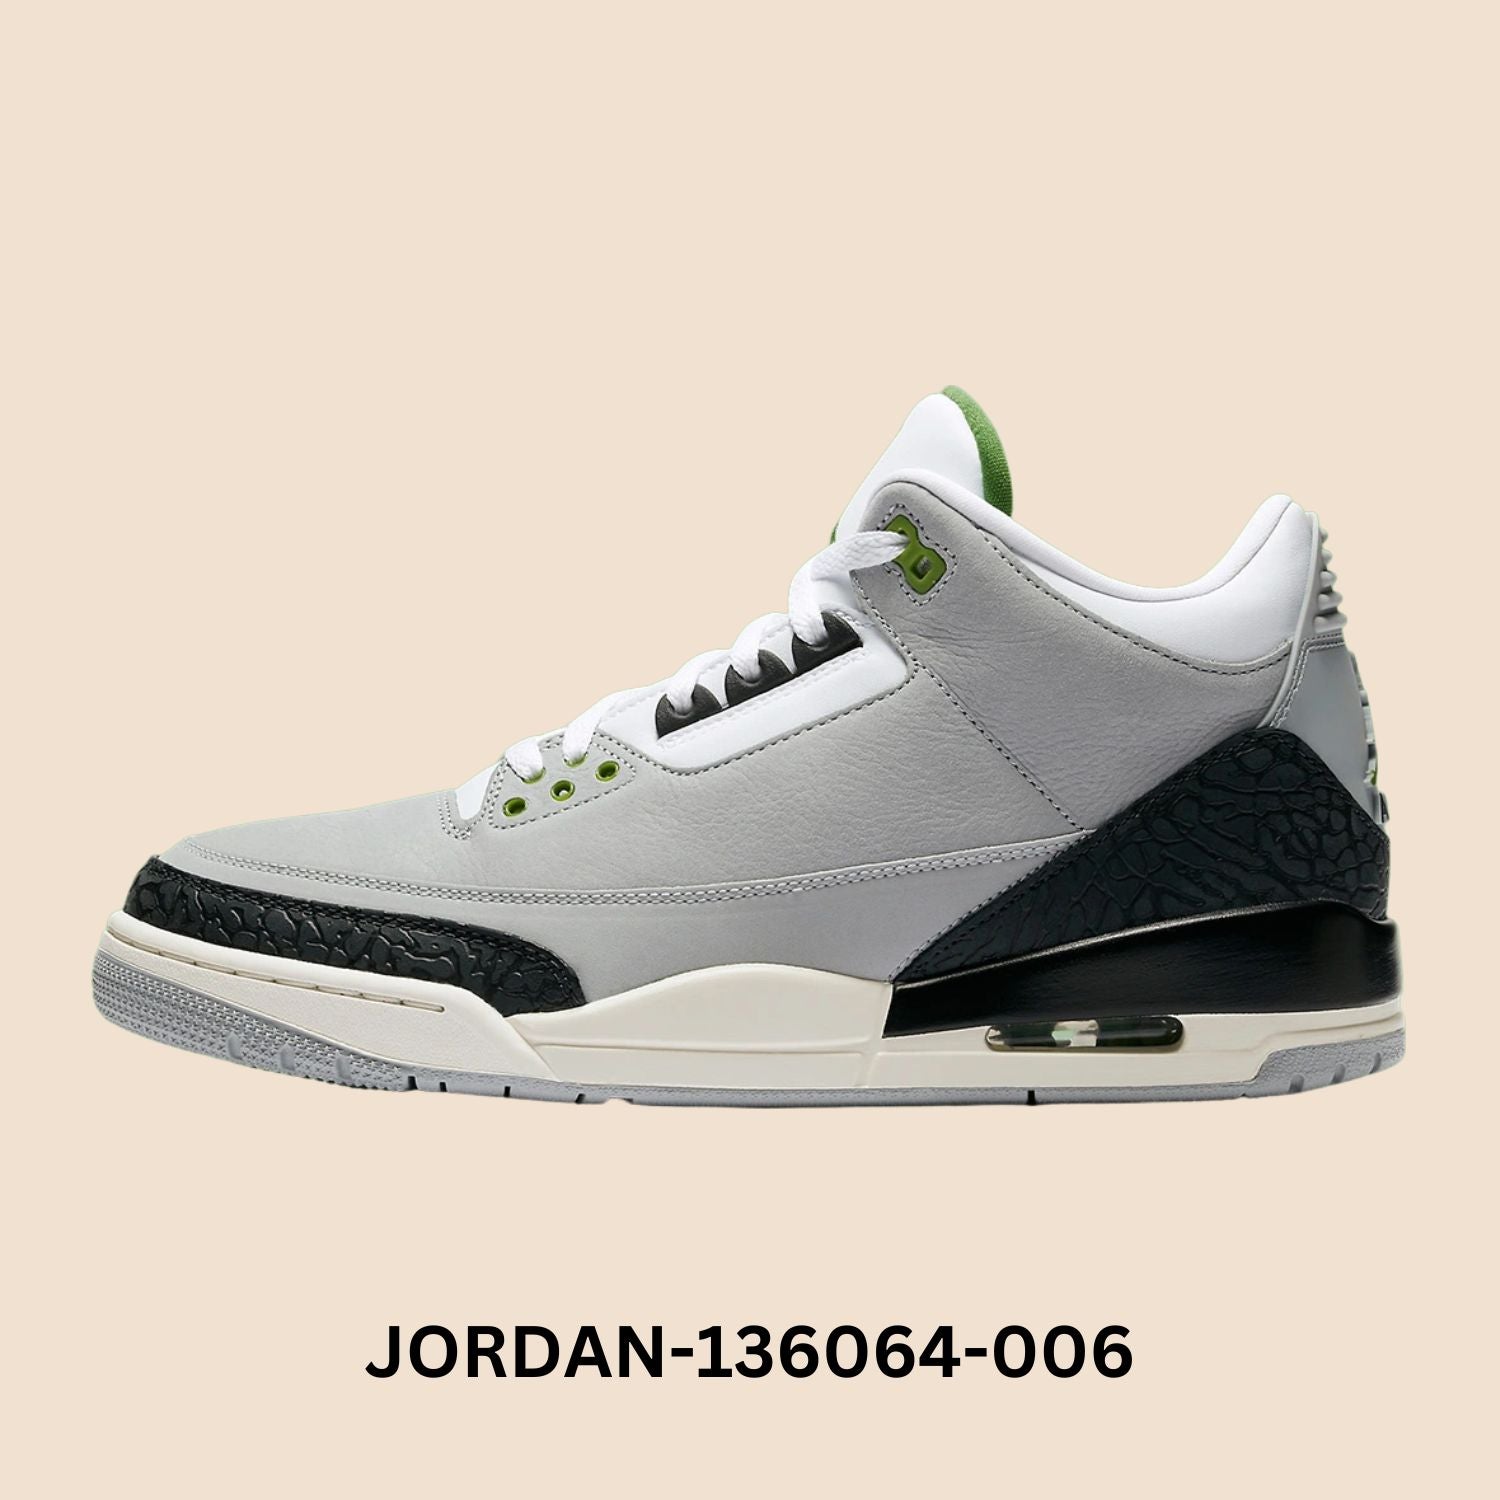 Air Jordan 3 Retro "Chlorophyll" Men's Style# 136064-006